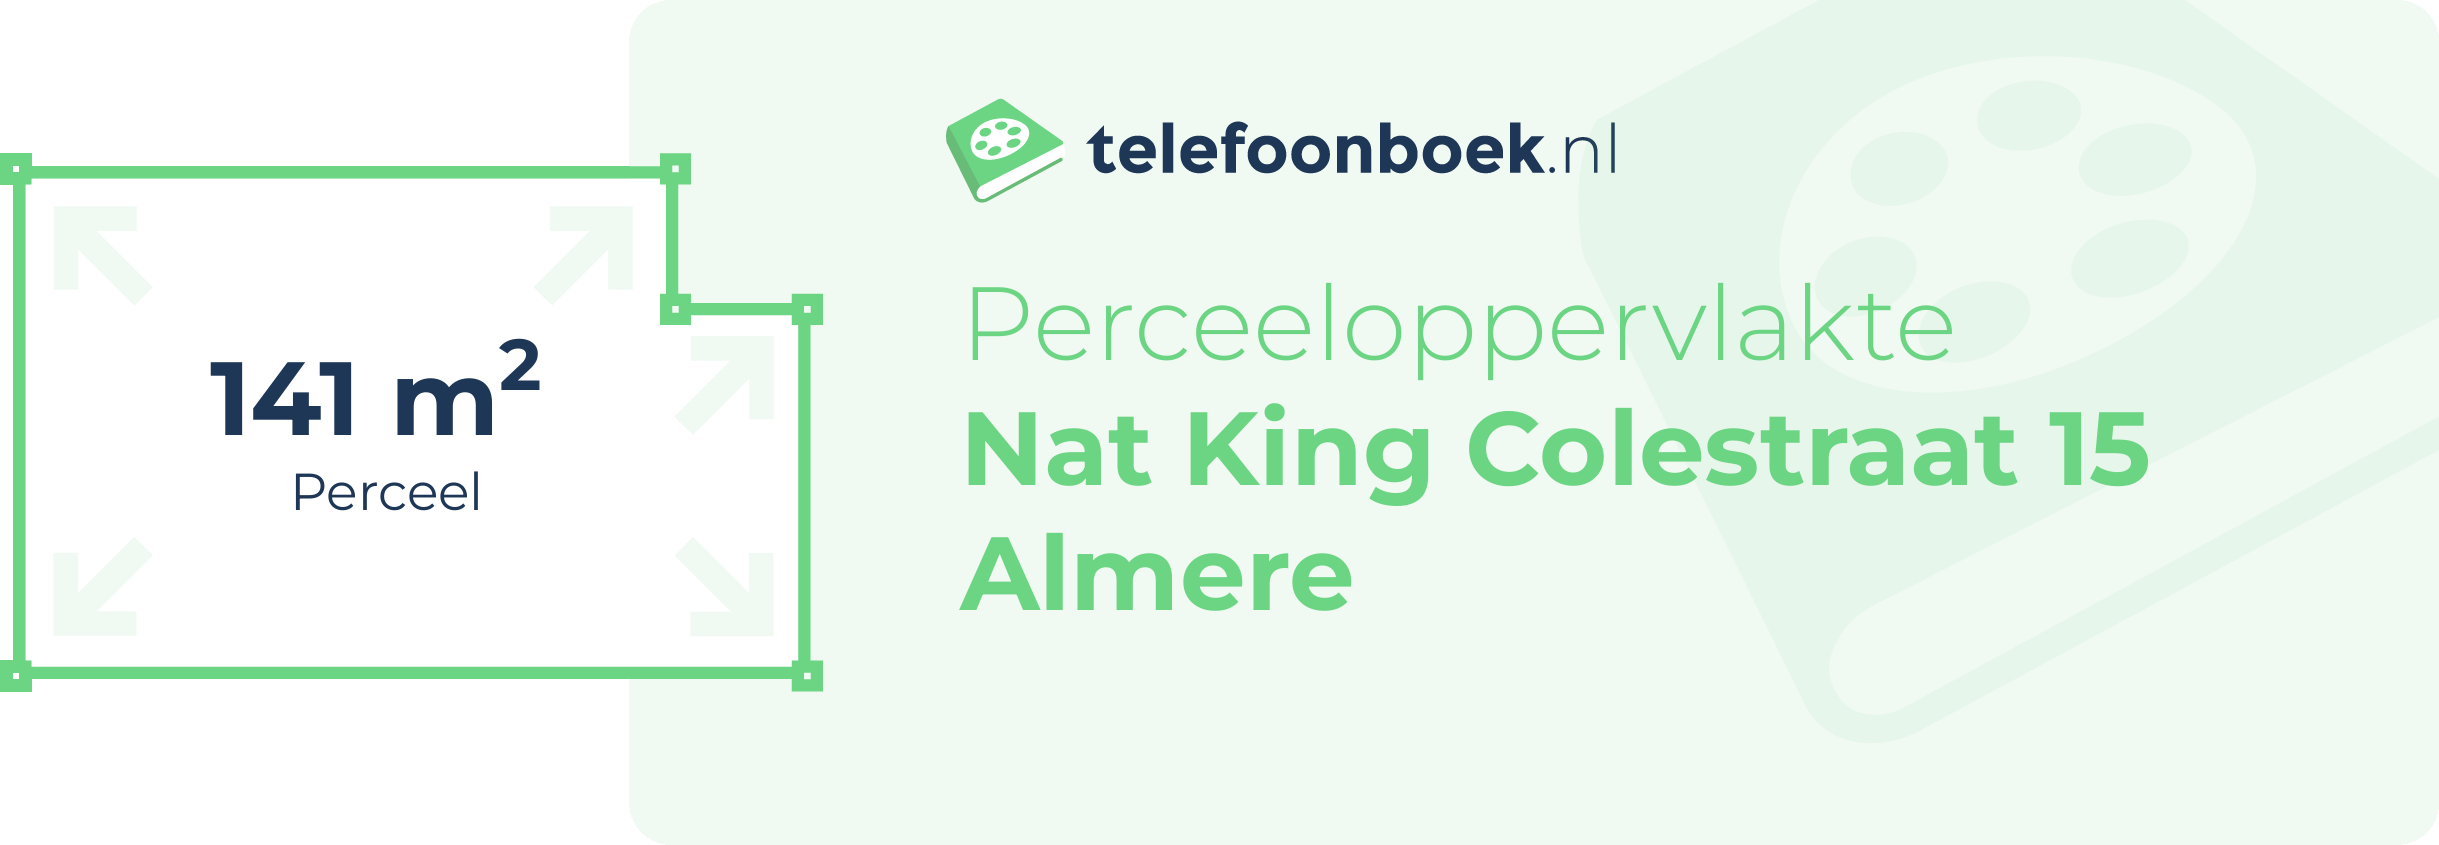 Perceeloppervlakte Nat King Colestraat 15 Almere